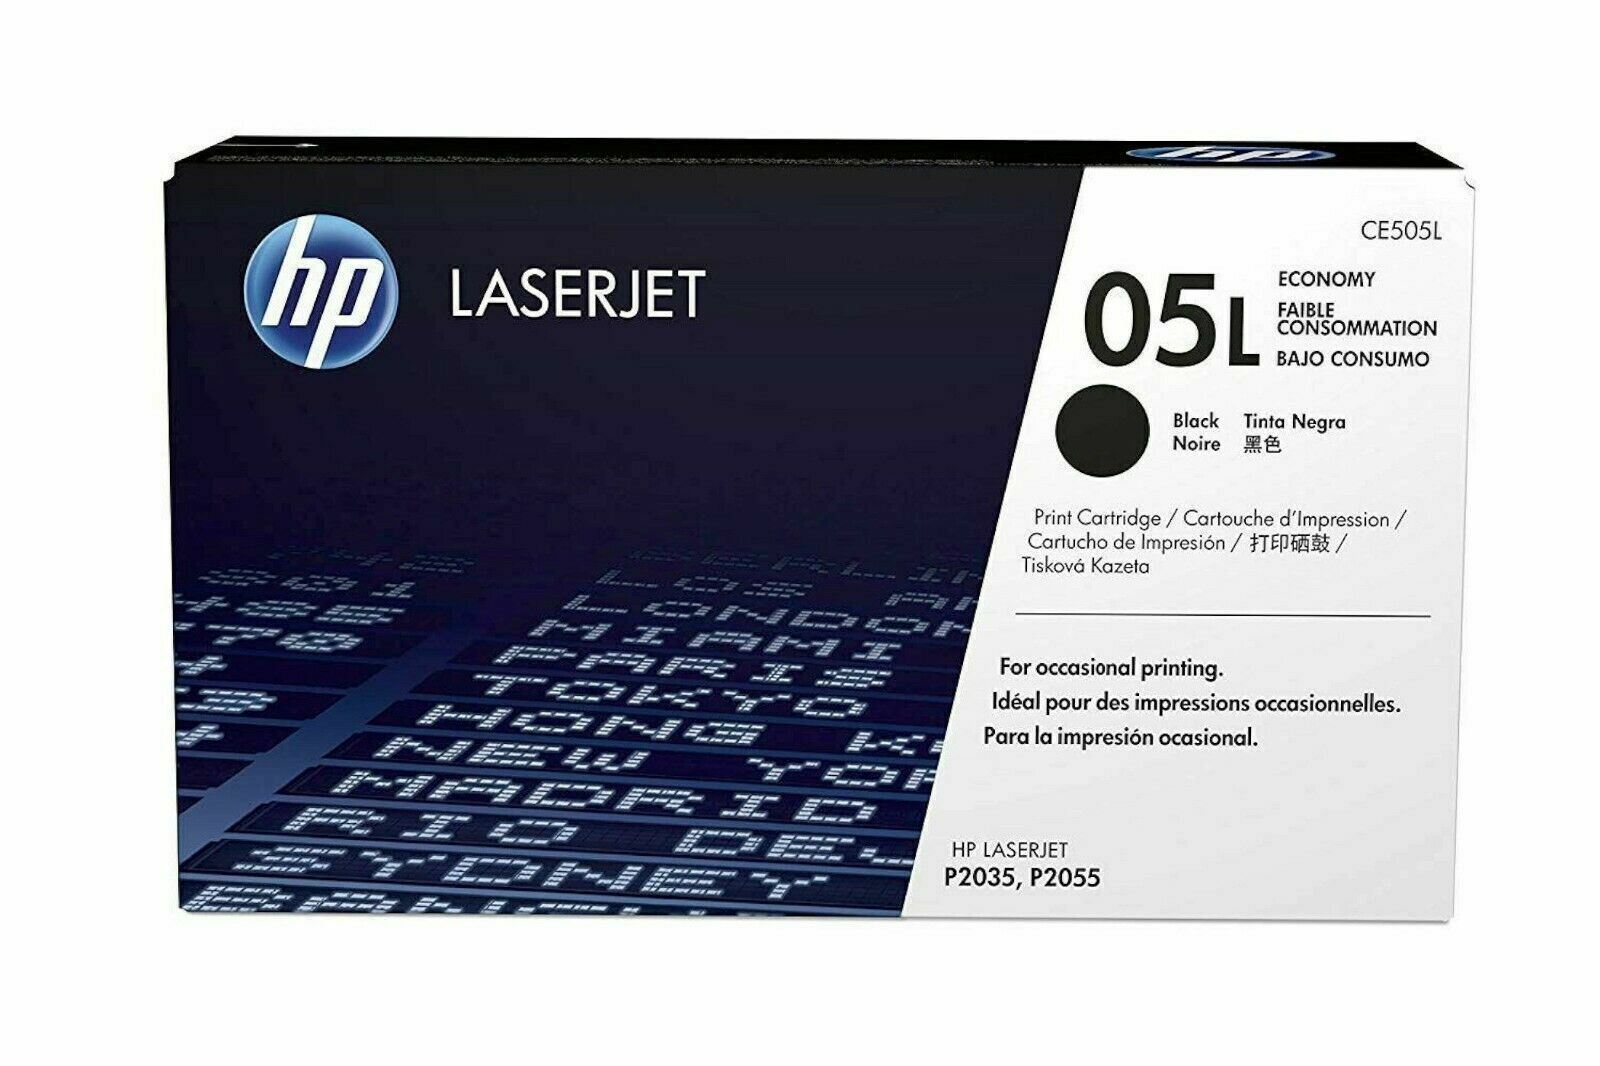 Primary image for NEW HP CE505L Economy Laserjet 05L BLACK Toner Cartridge P2035 P2055